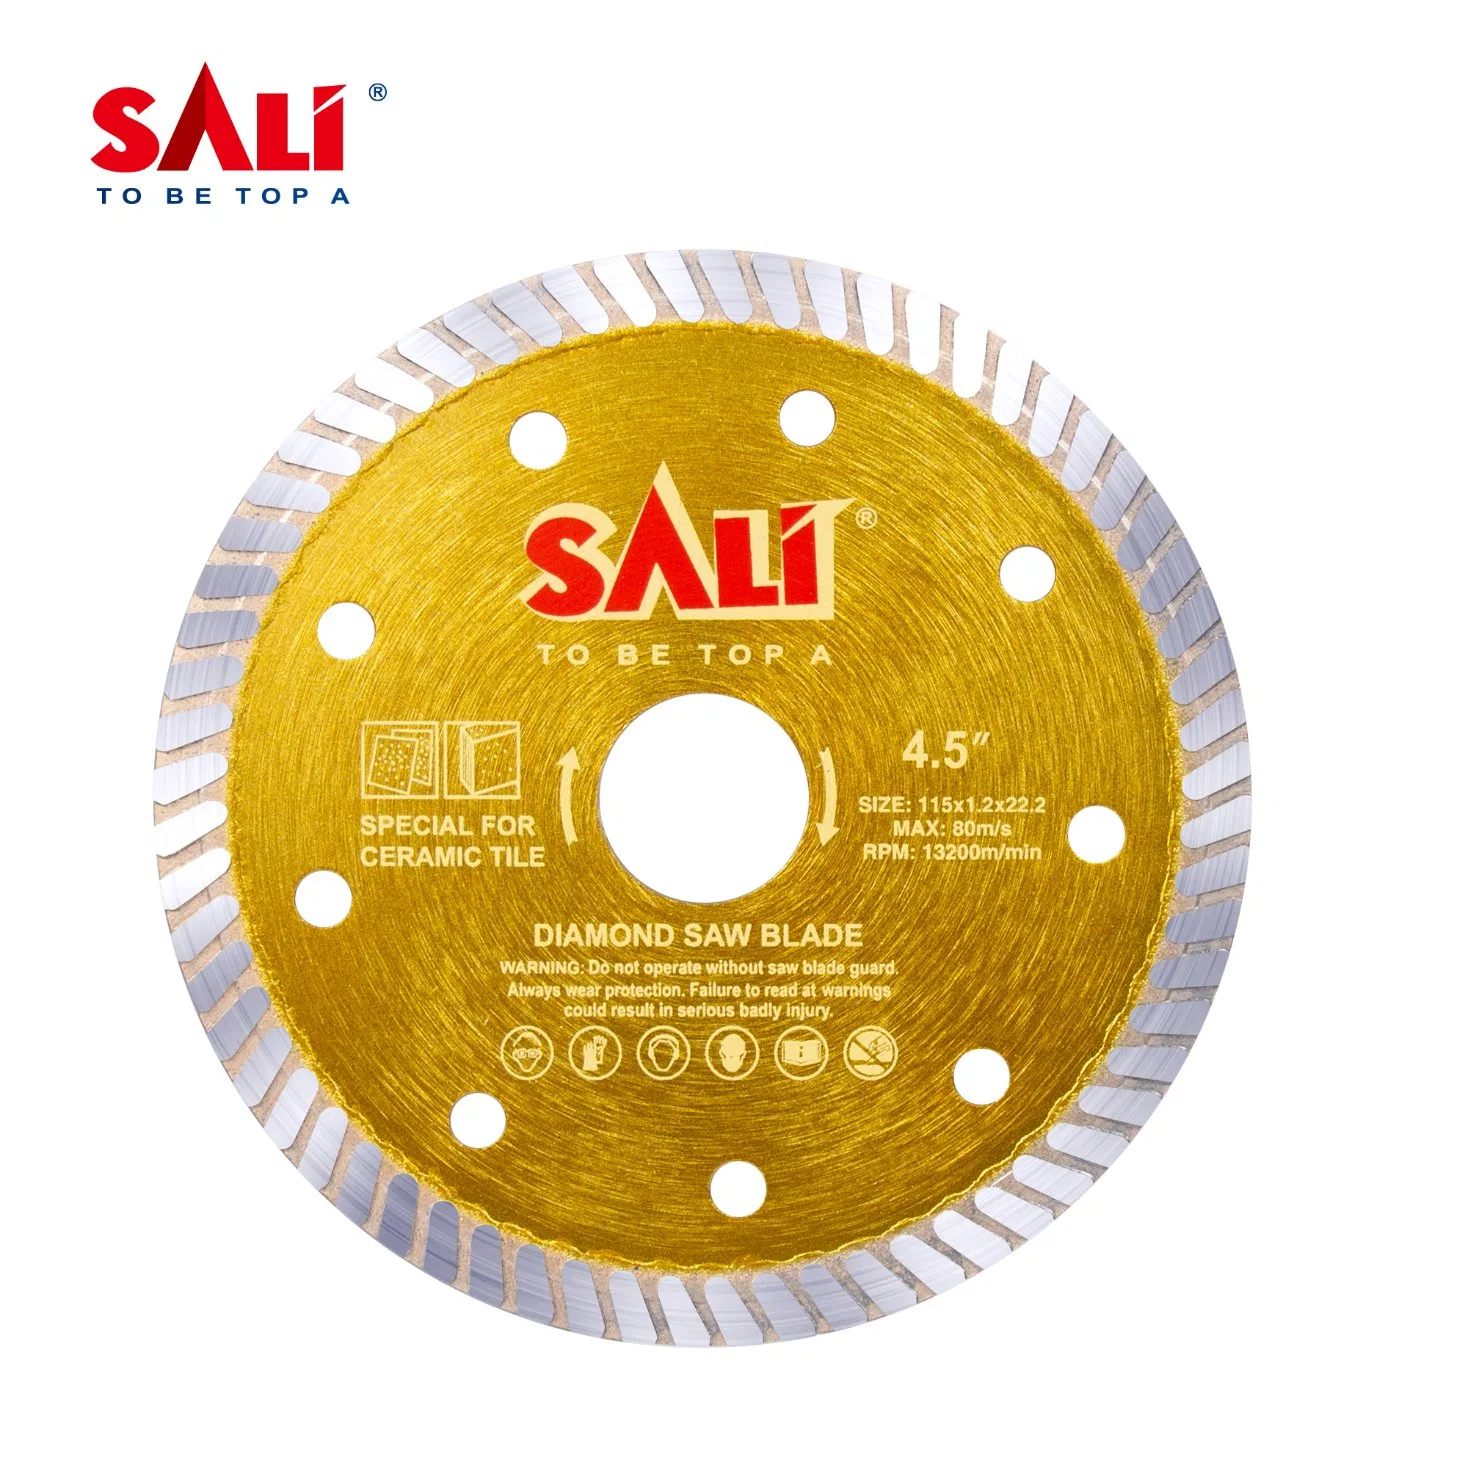 Sali 4'' Professional Hot Press Diamond Saw Blade for Ceramic Tile